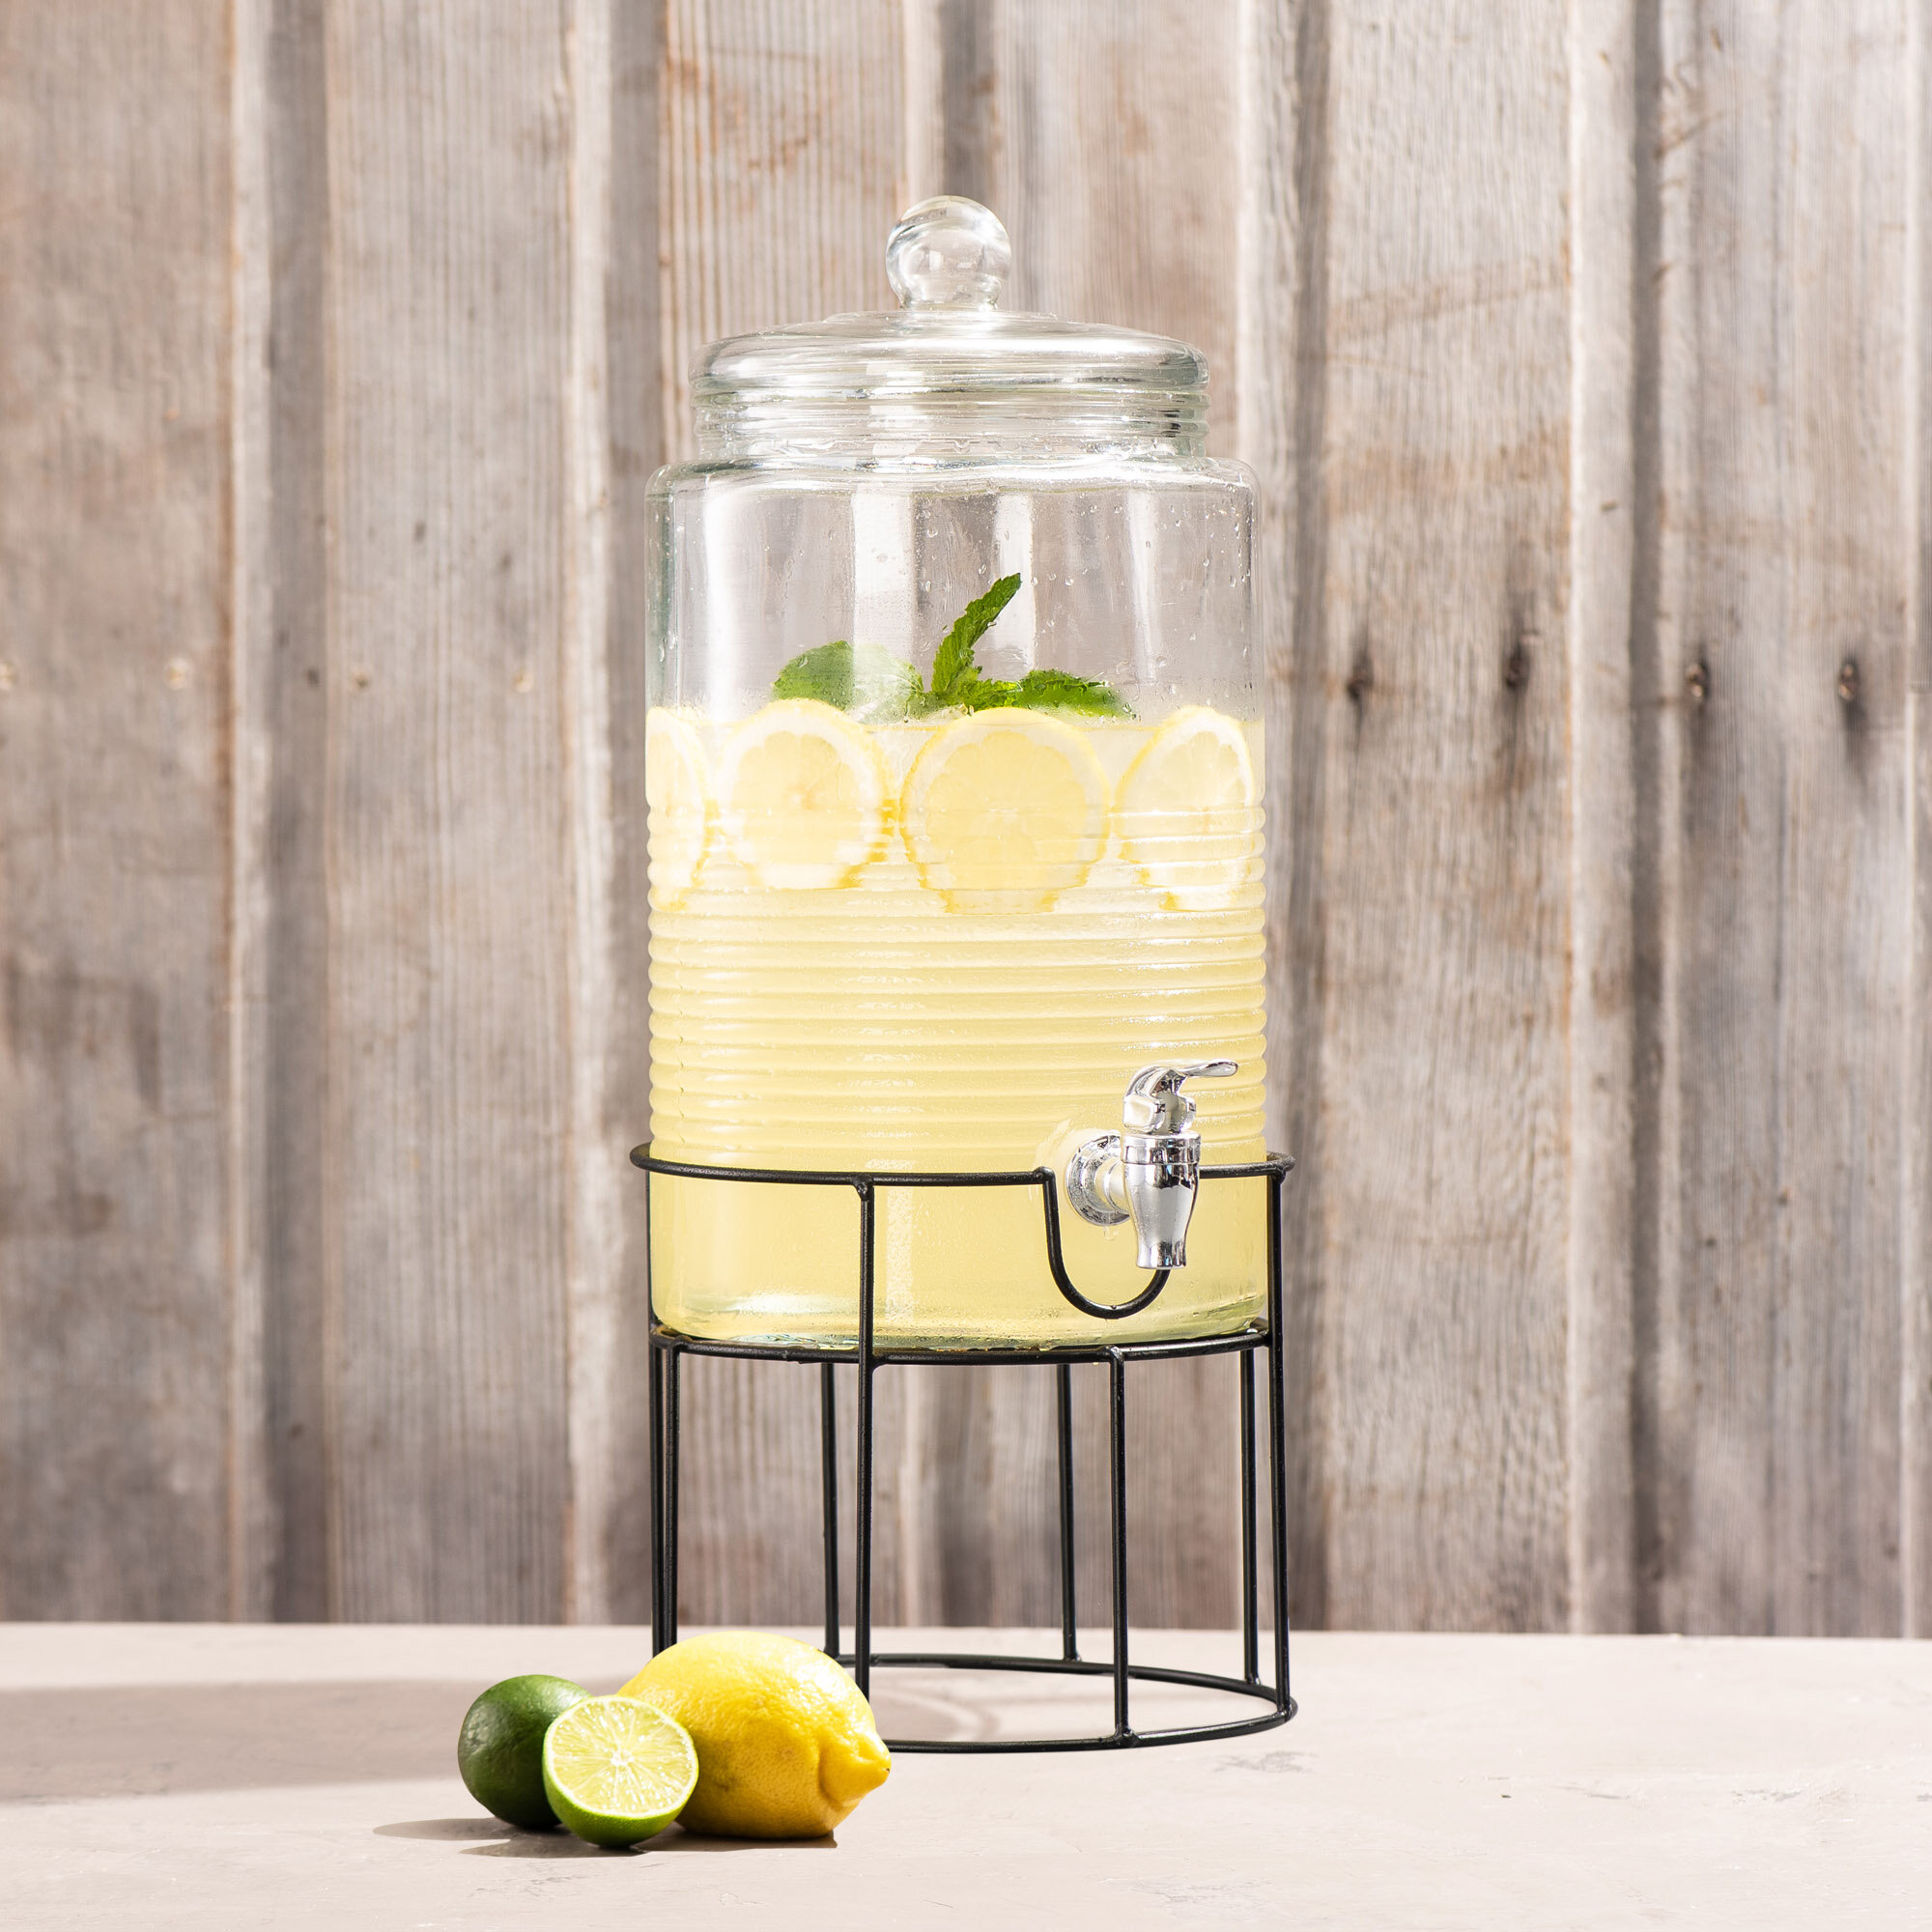 Prep & Savour 1.5 Gallon Hammered Glass Beverage Dispenser with Lid - Stainless Steel Spigot - Decorative Round Jar for Drinks - Lemonade Sangria Tea